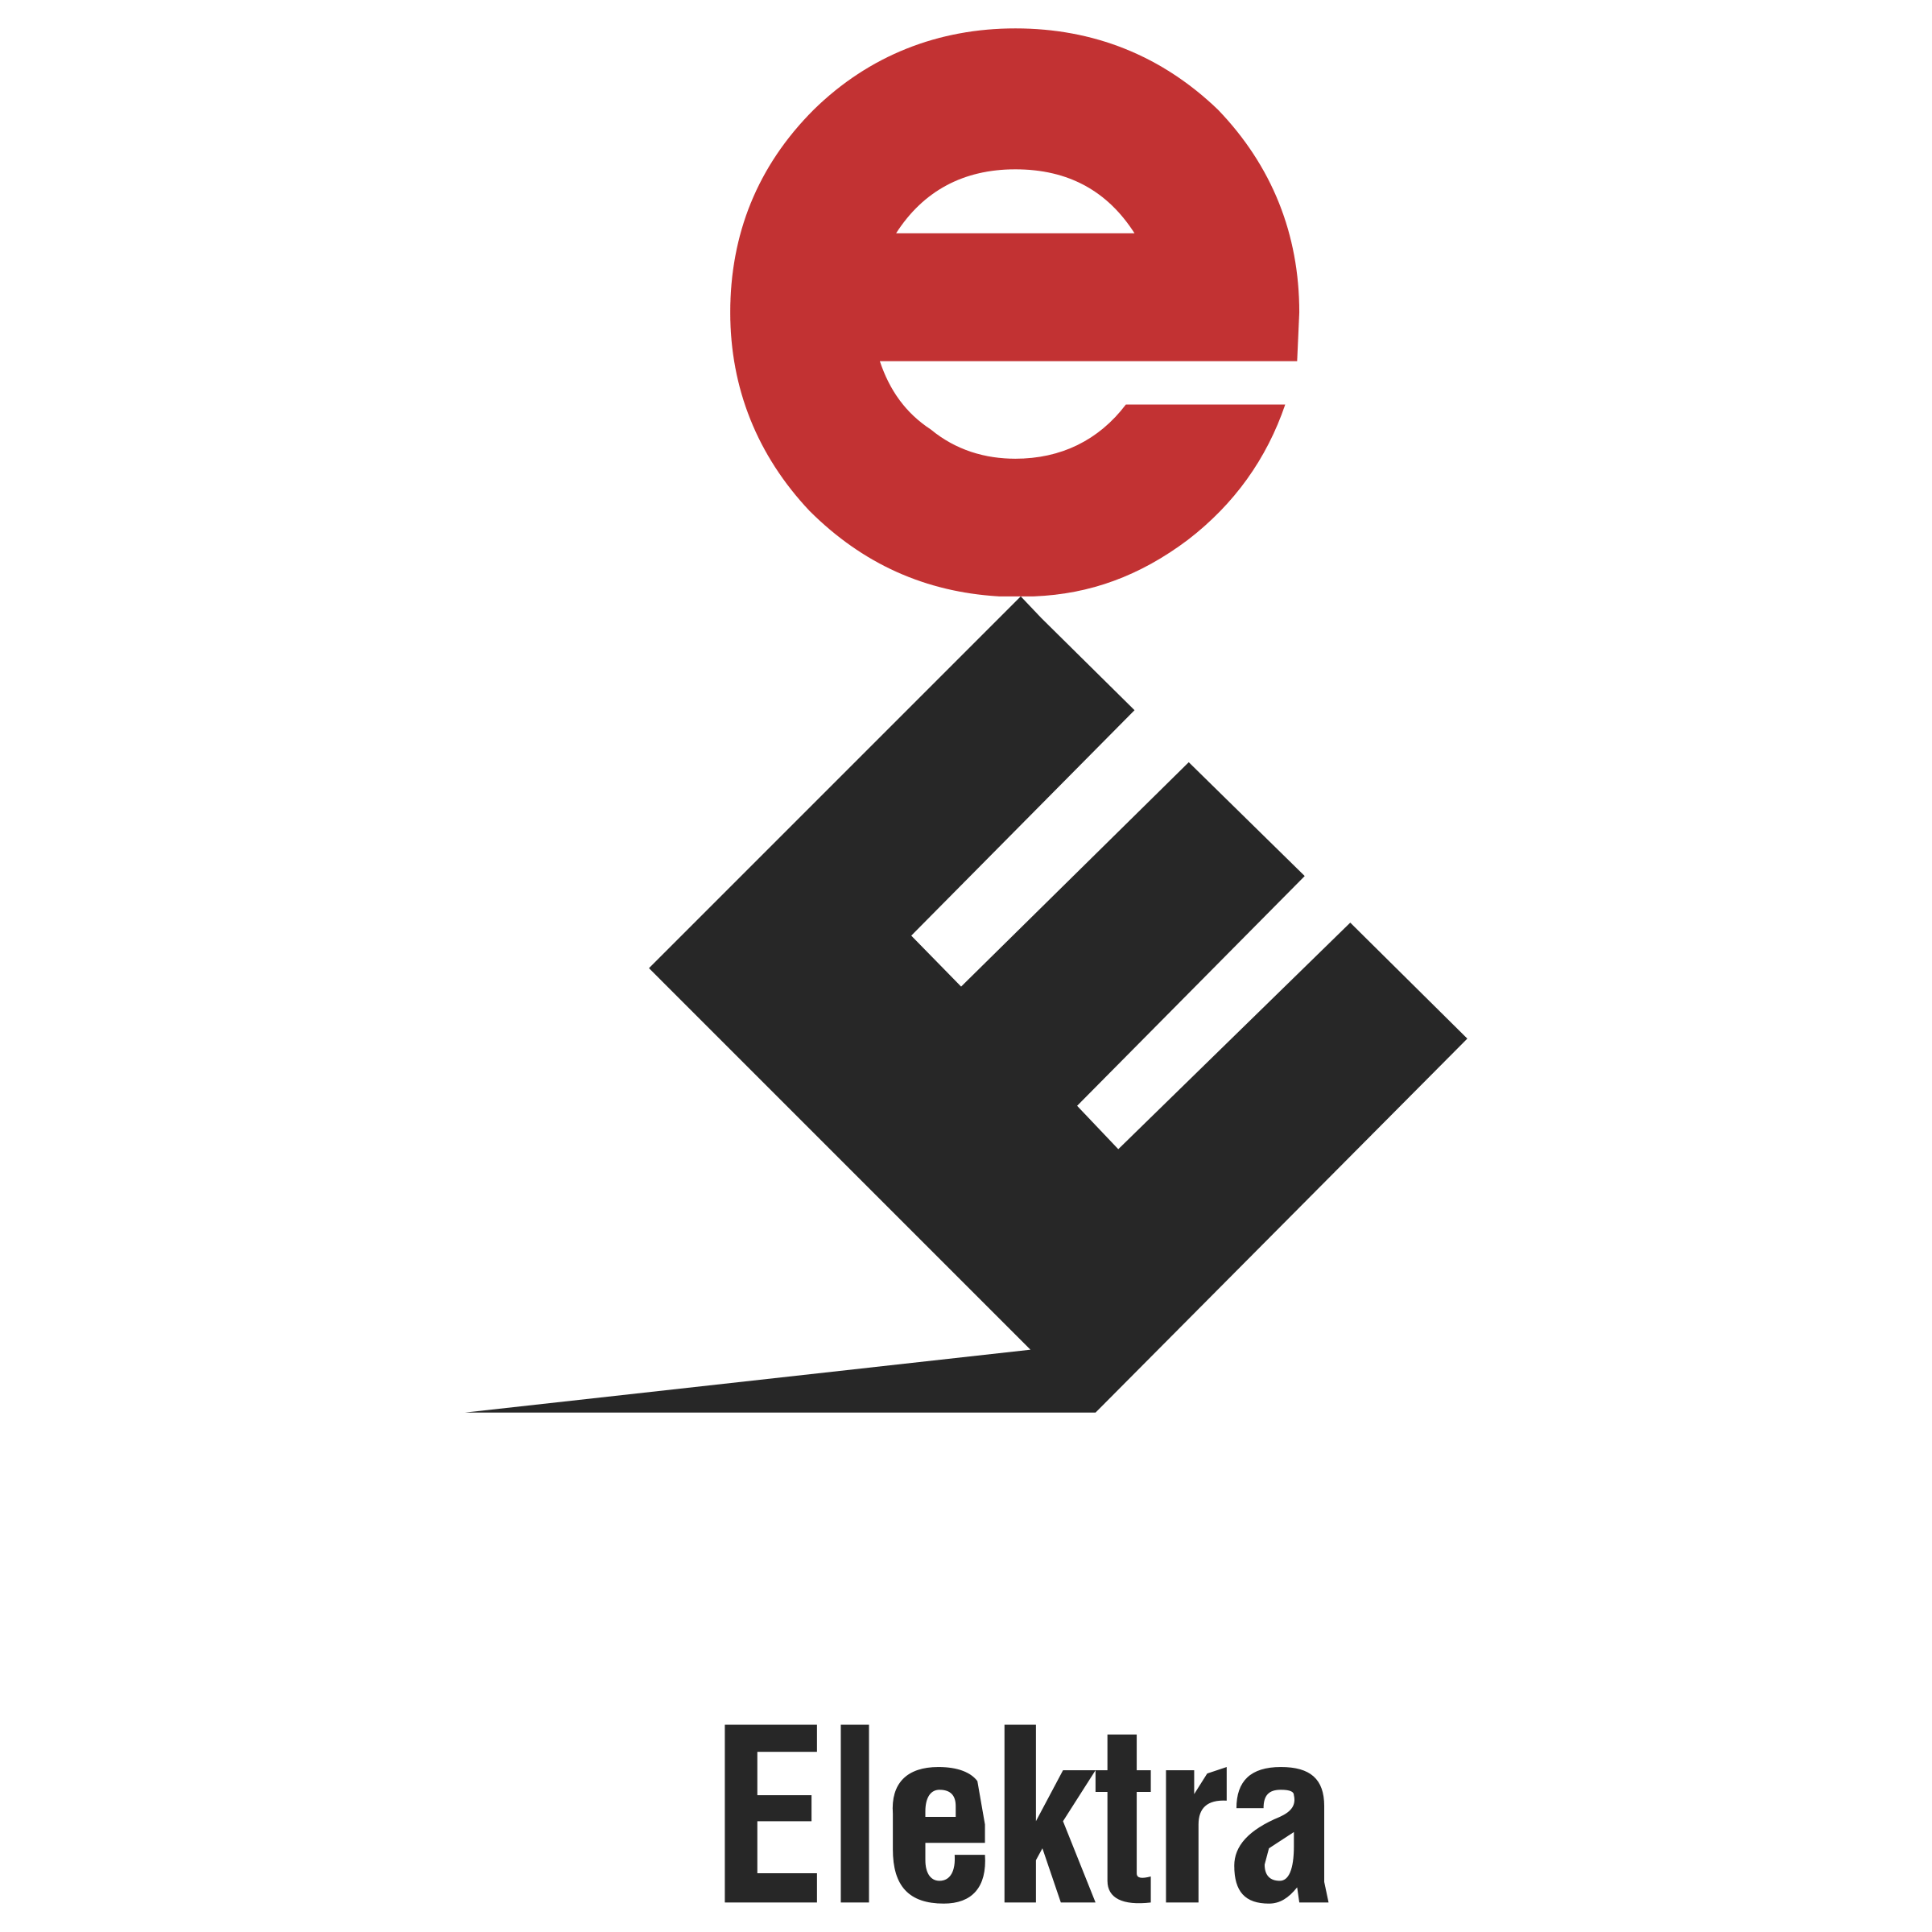 Elektra Logo - Elektra Records Logo PNG Transparent & SVG Vector - Freebie Supply